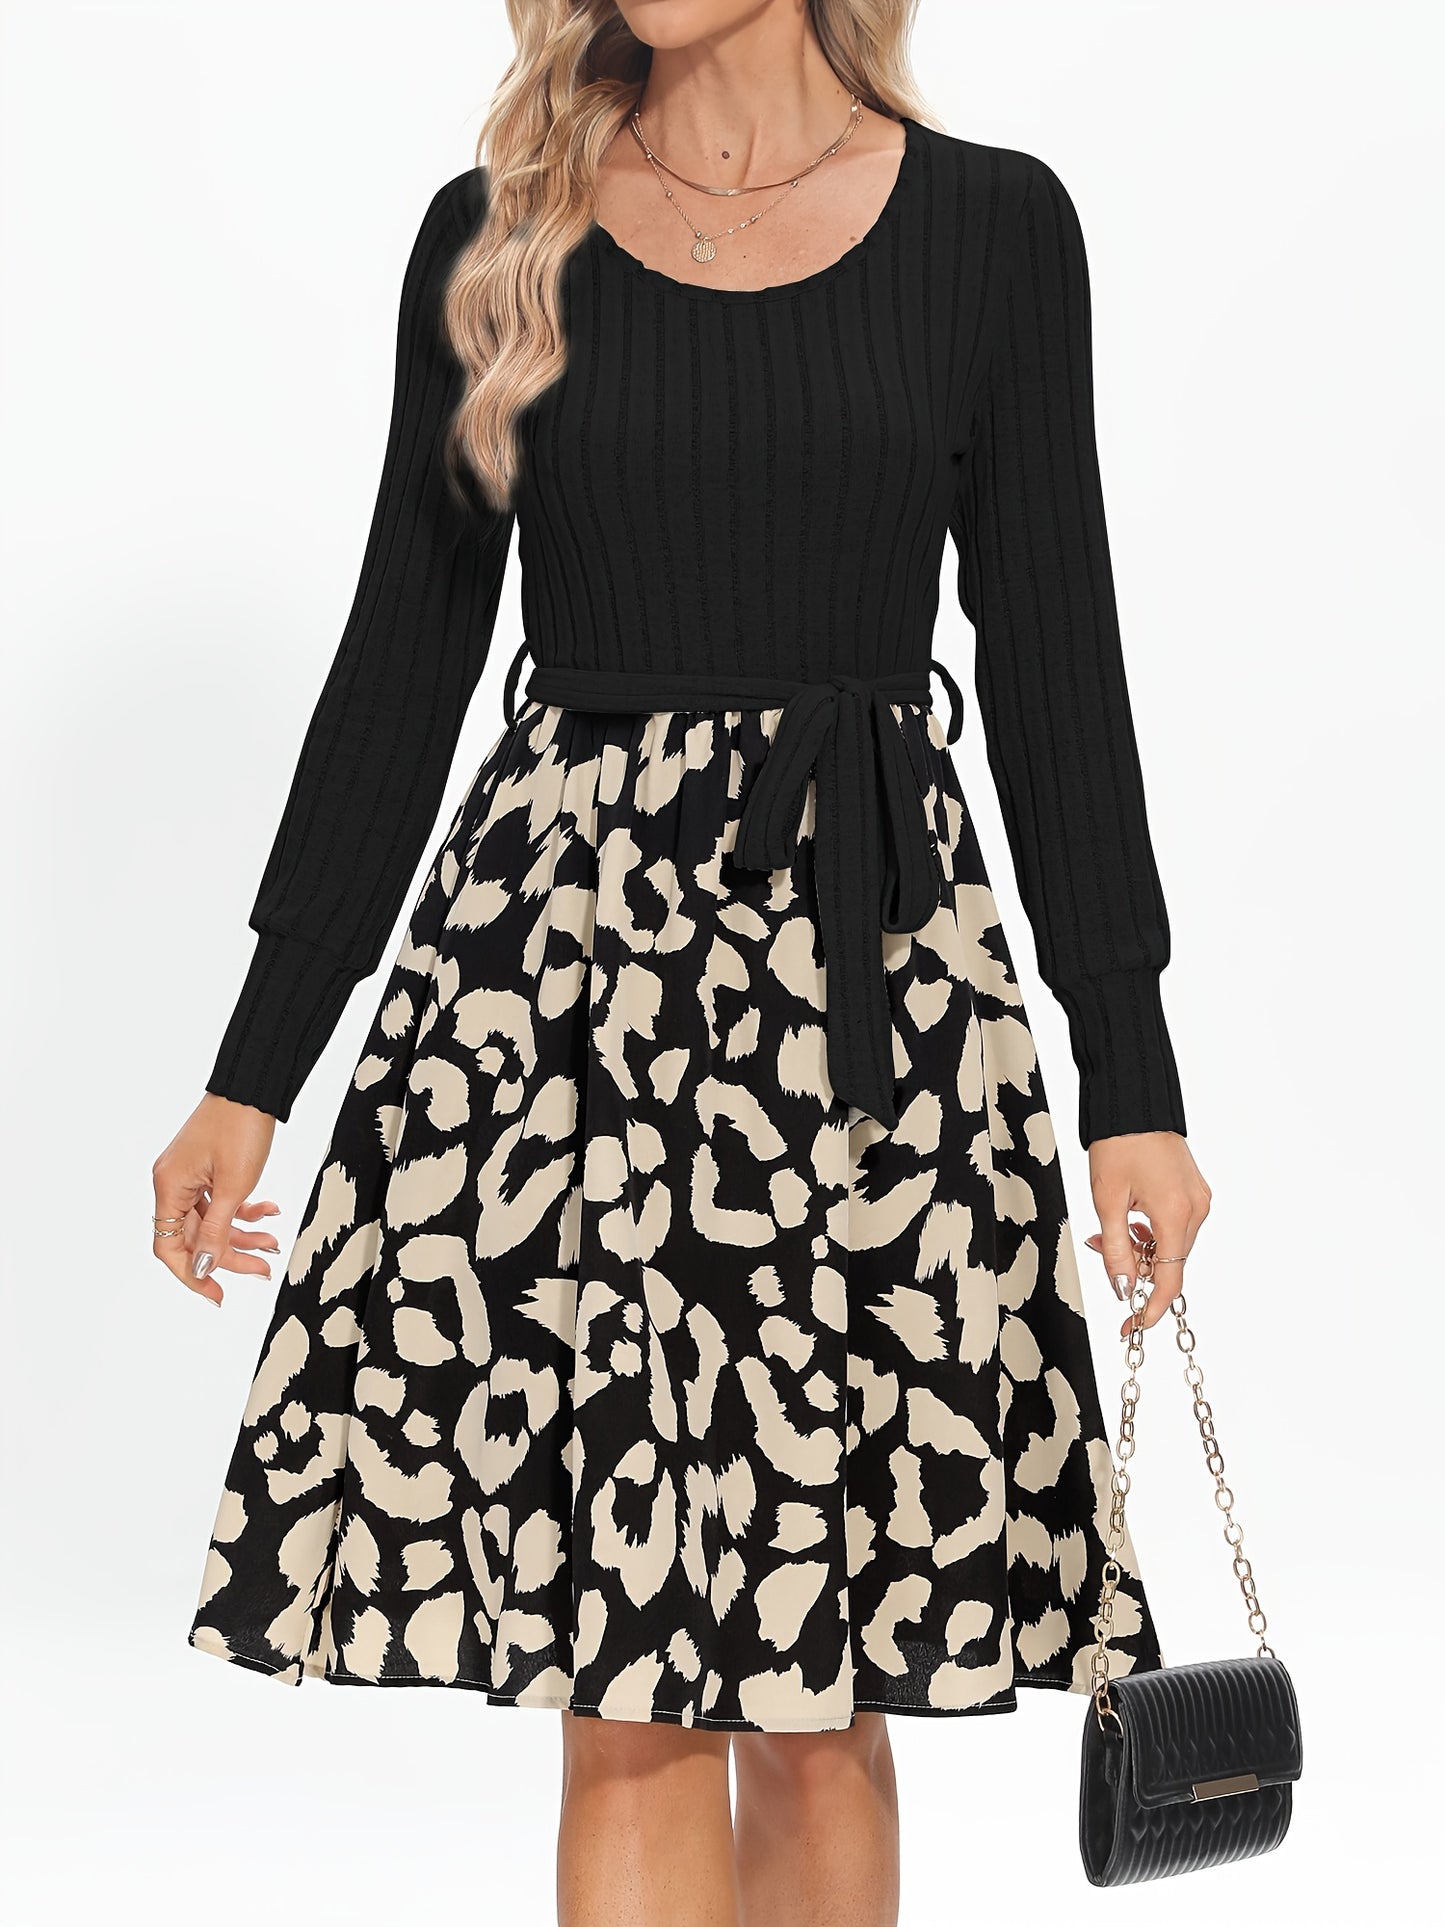 Vzyzv Leopard Print Splicing Dress, Elegant Crew Neck Long Sleeve Dress, Women's Clothing